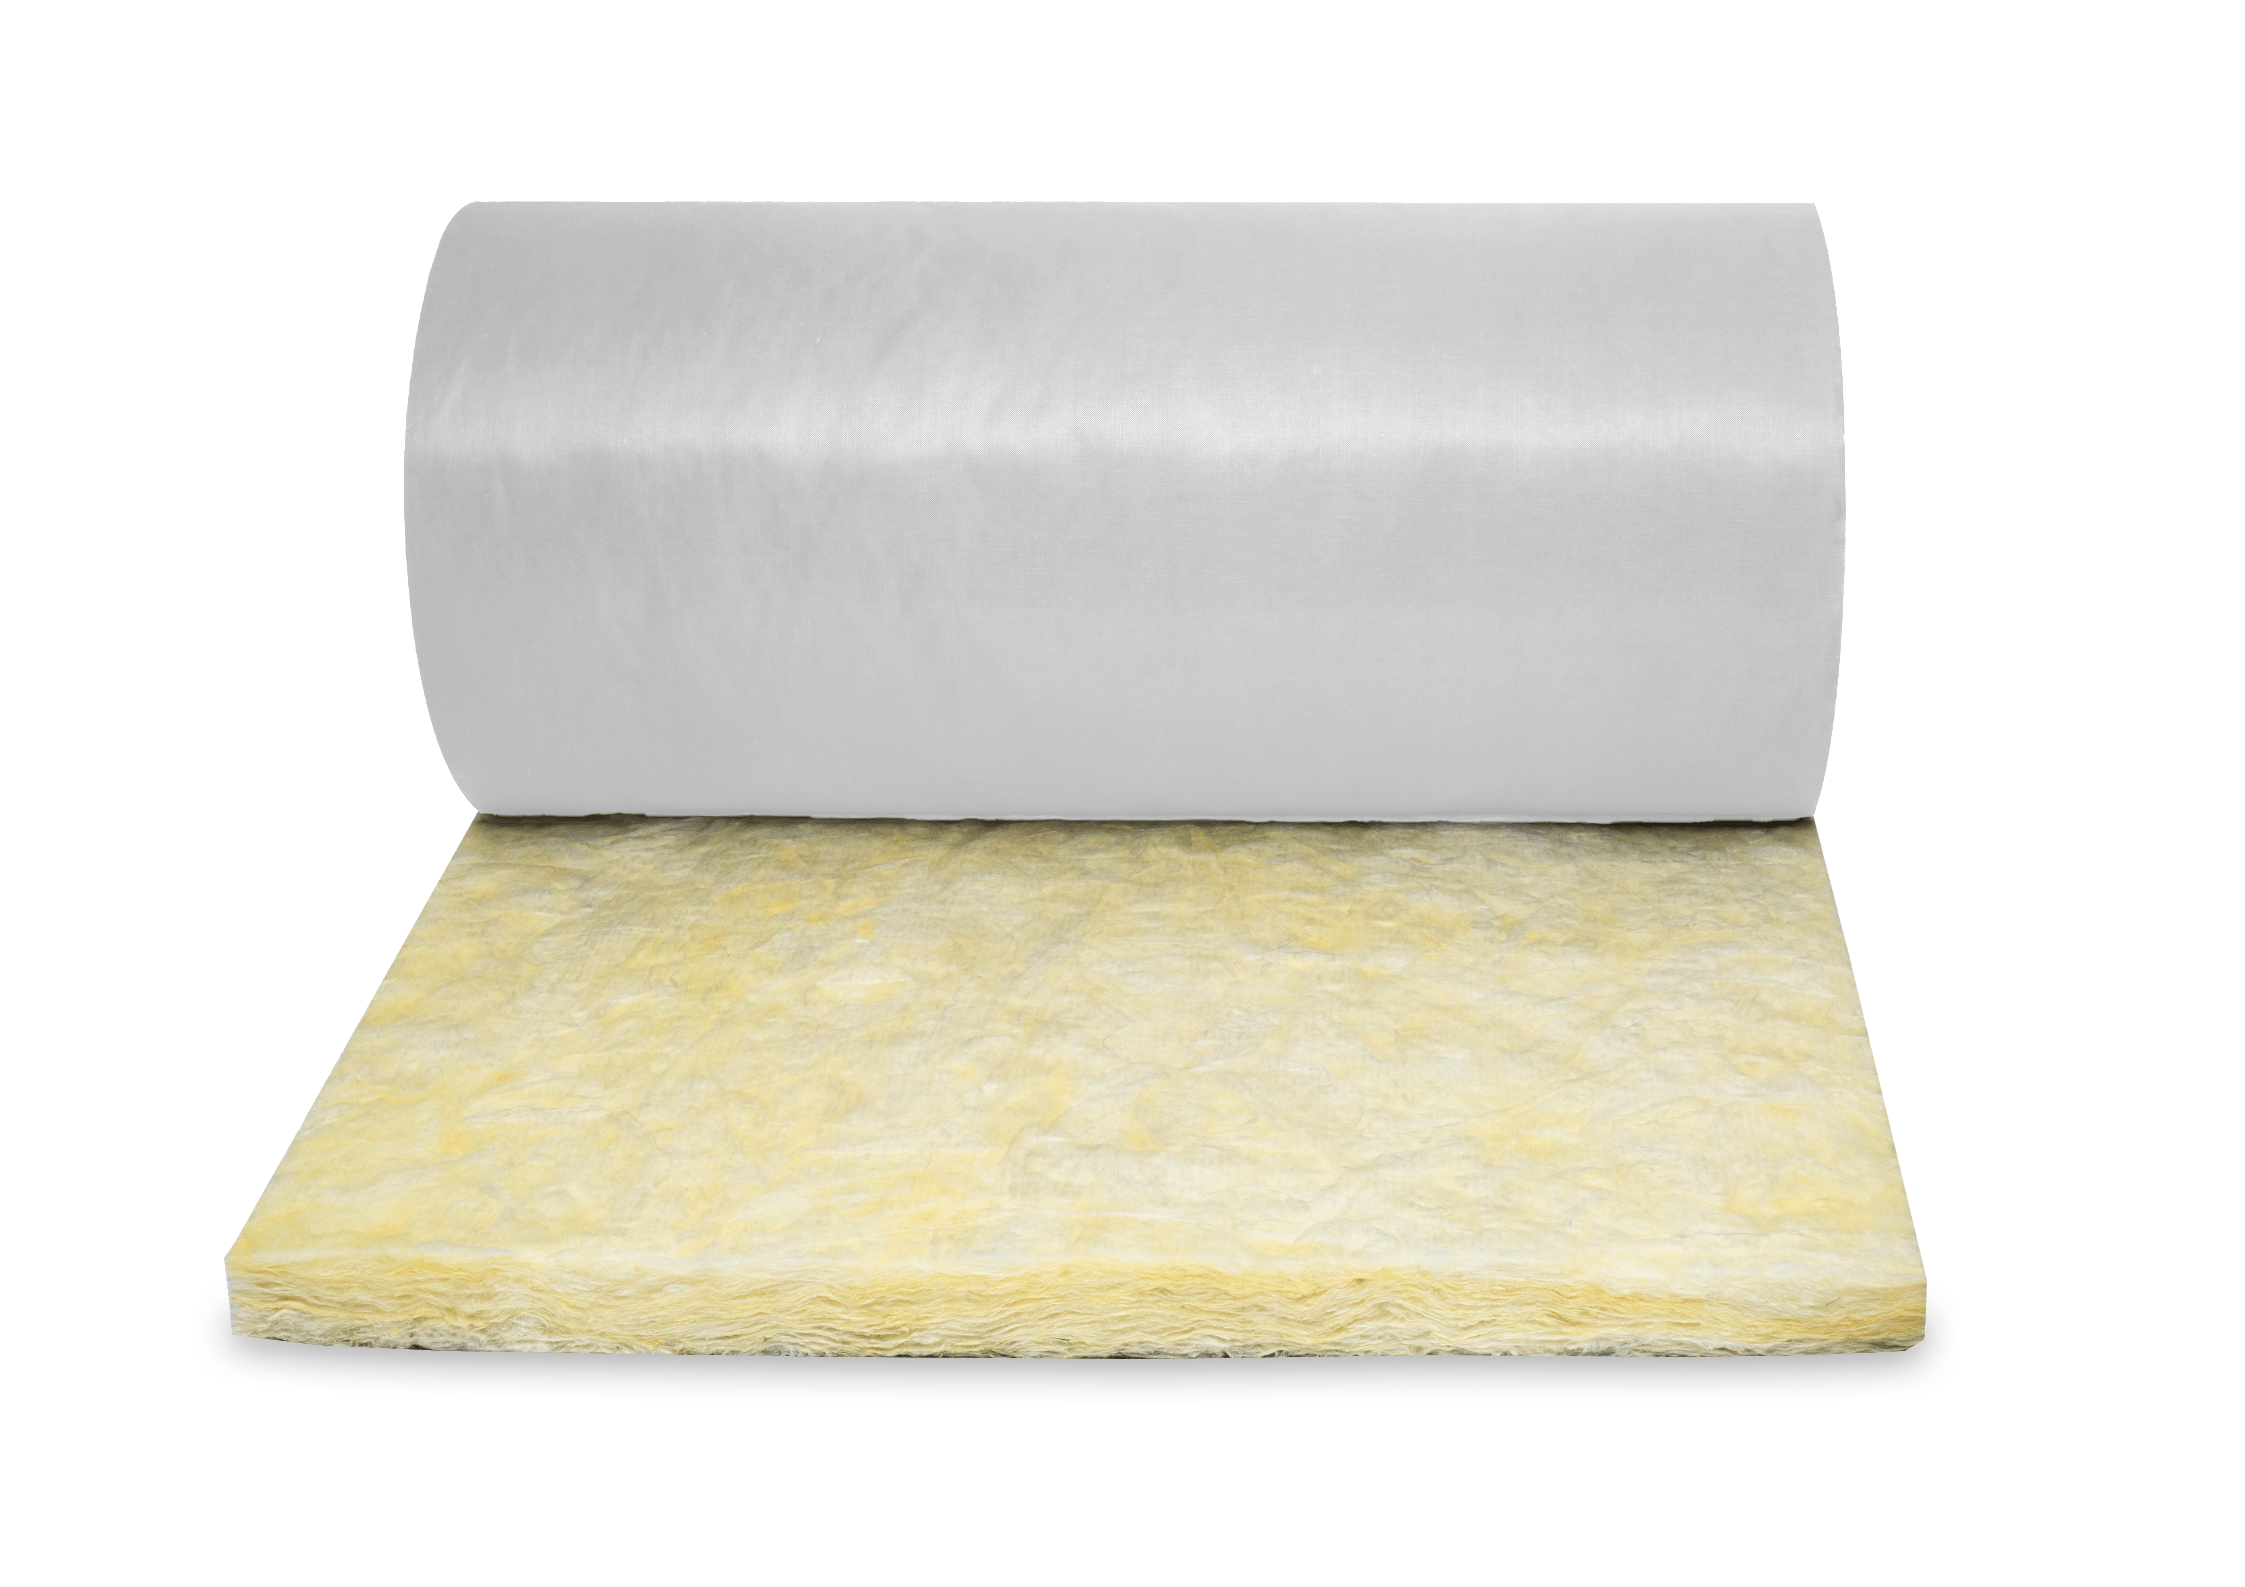 TEKHVAC WHITE TEKHVAC Coated Foil Faced Duct Wrap | 1200 x 40mm IUK01584 TEKHVAC Foil Faced Duct Wrap 1200 x 40mm | insulationuk.co.uk